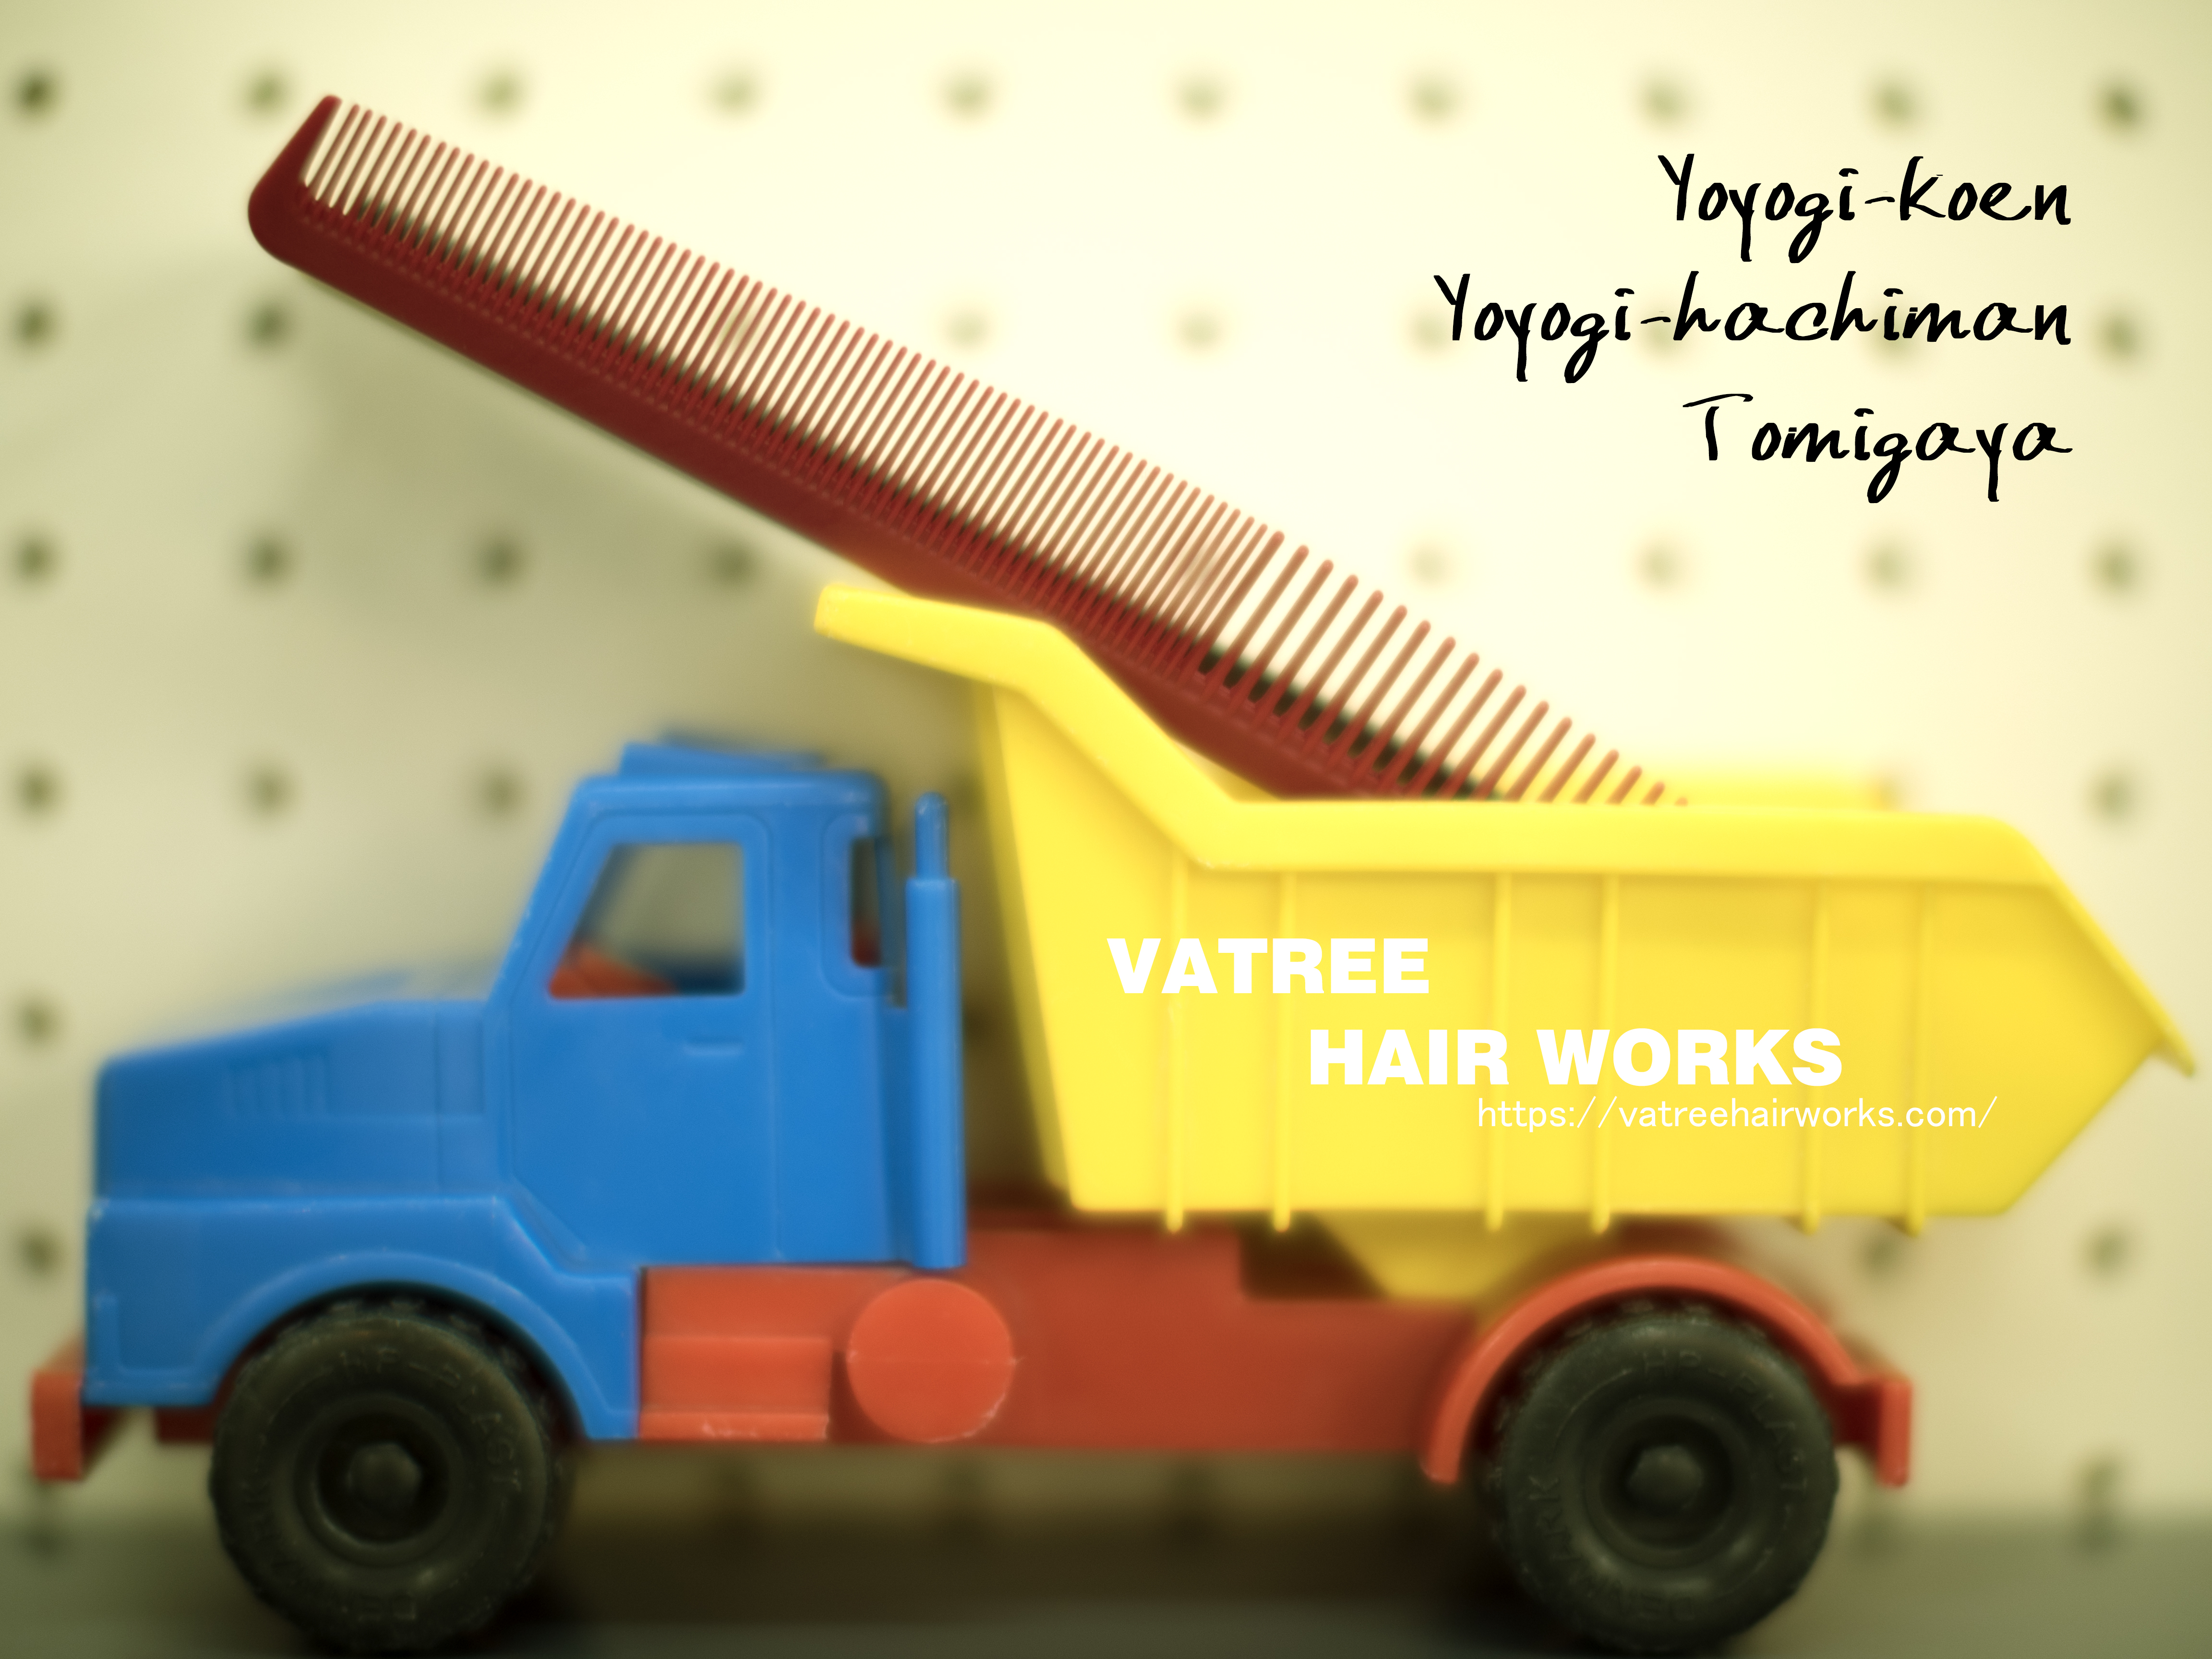 VATREE HAIR WORKSと書かれた車のおもちゃ